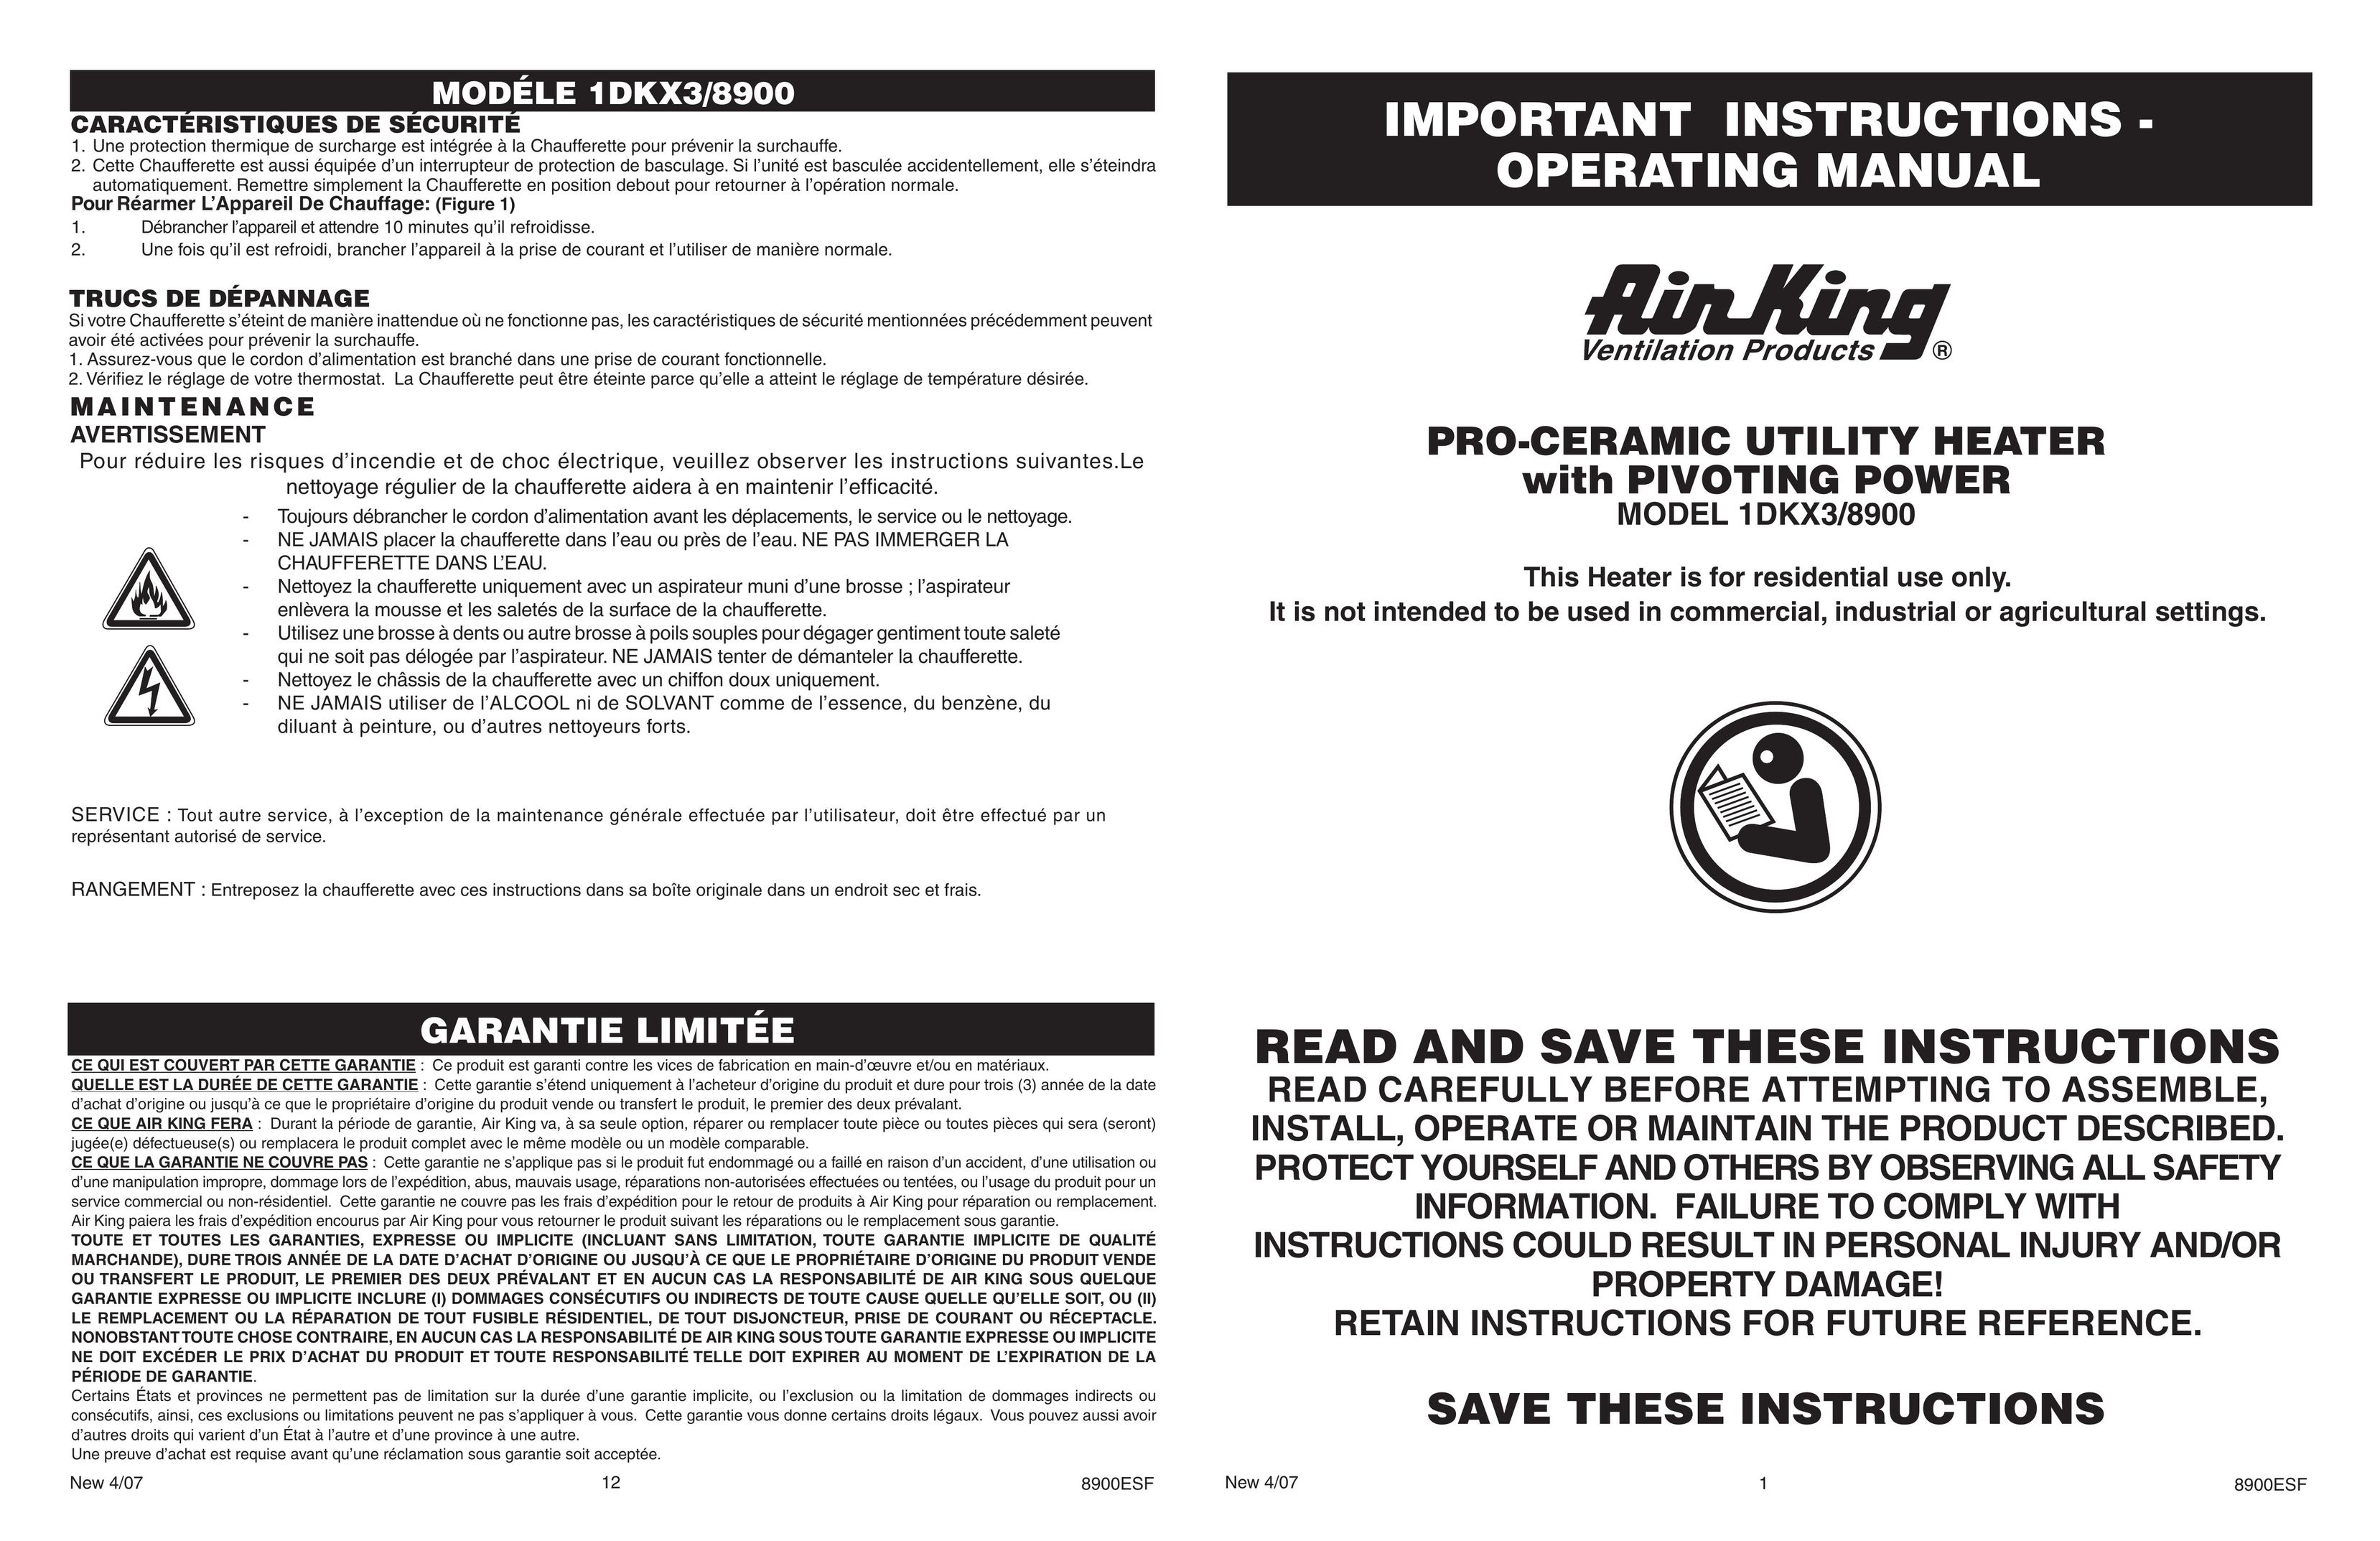 Air King 1DKX3/8900 Electric Heater User Manual